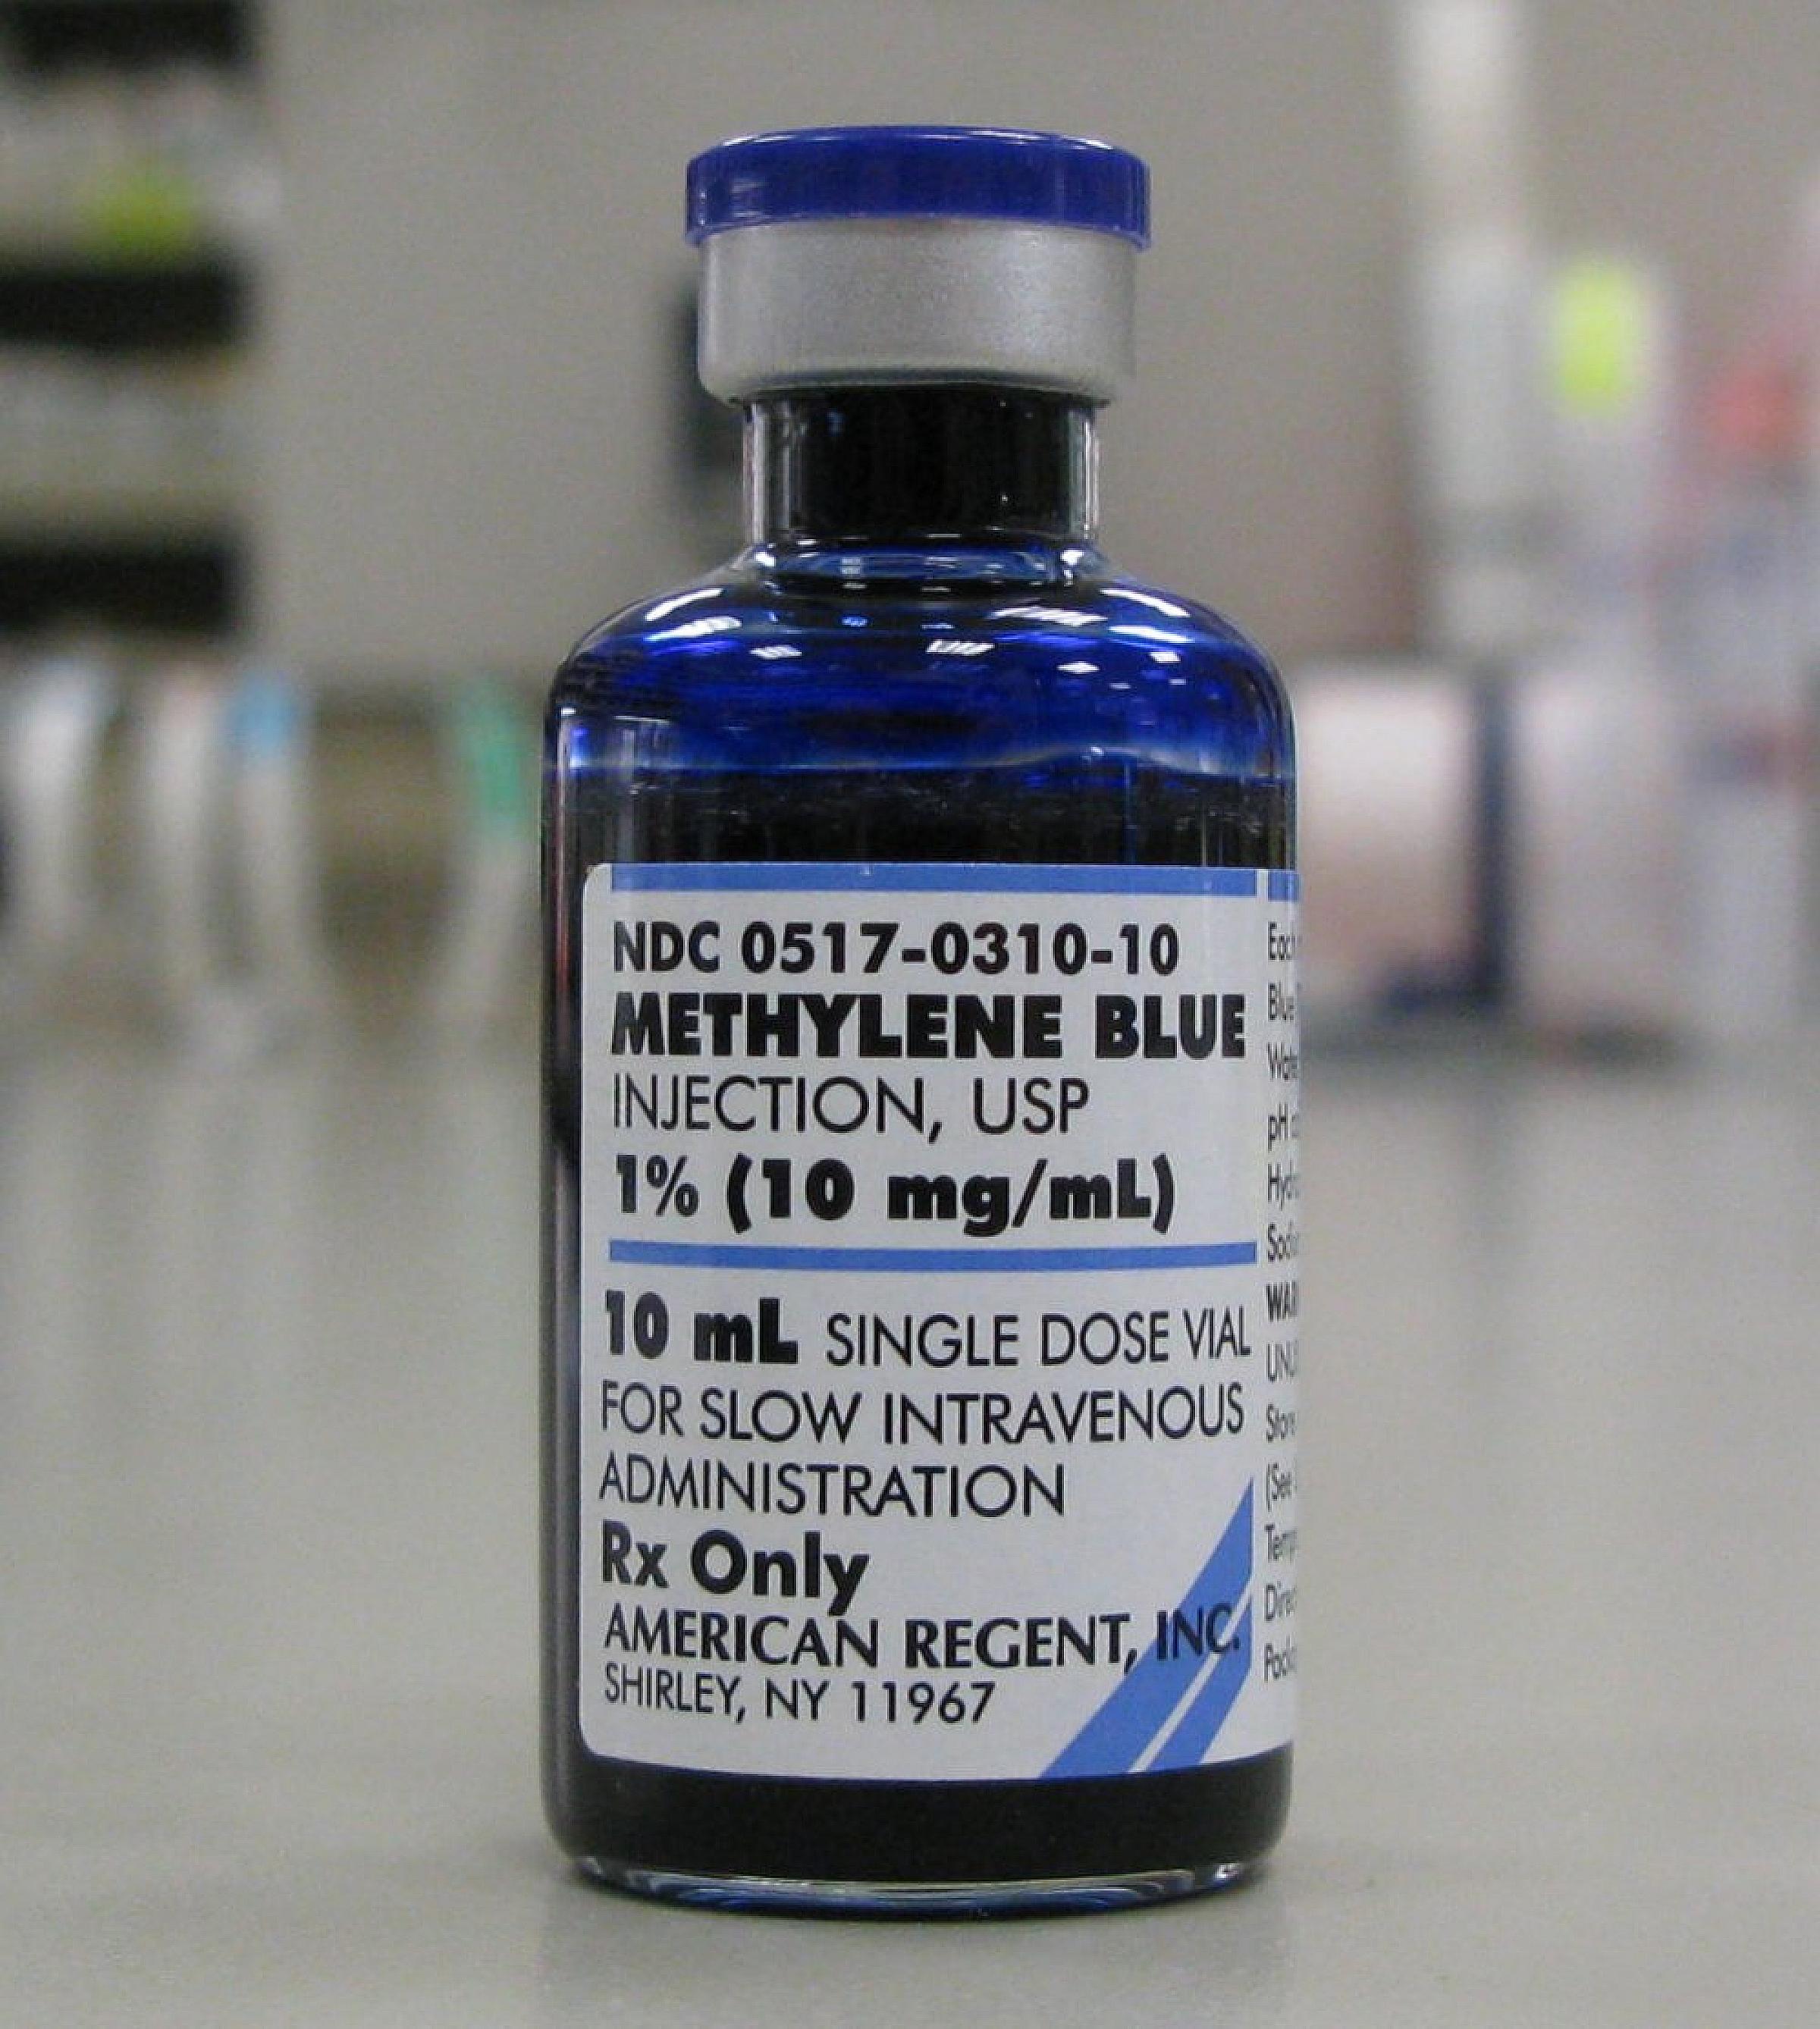 Methylene Blue medication vial